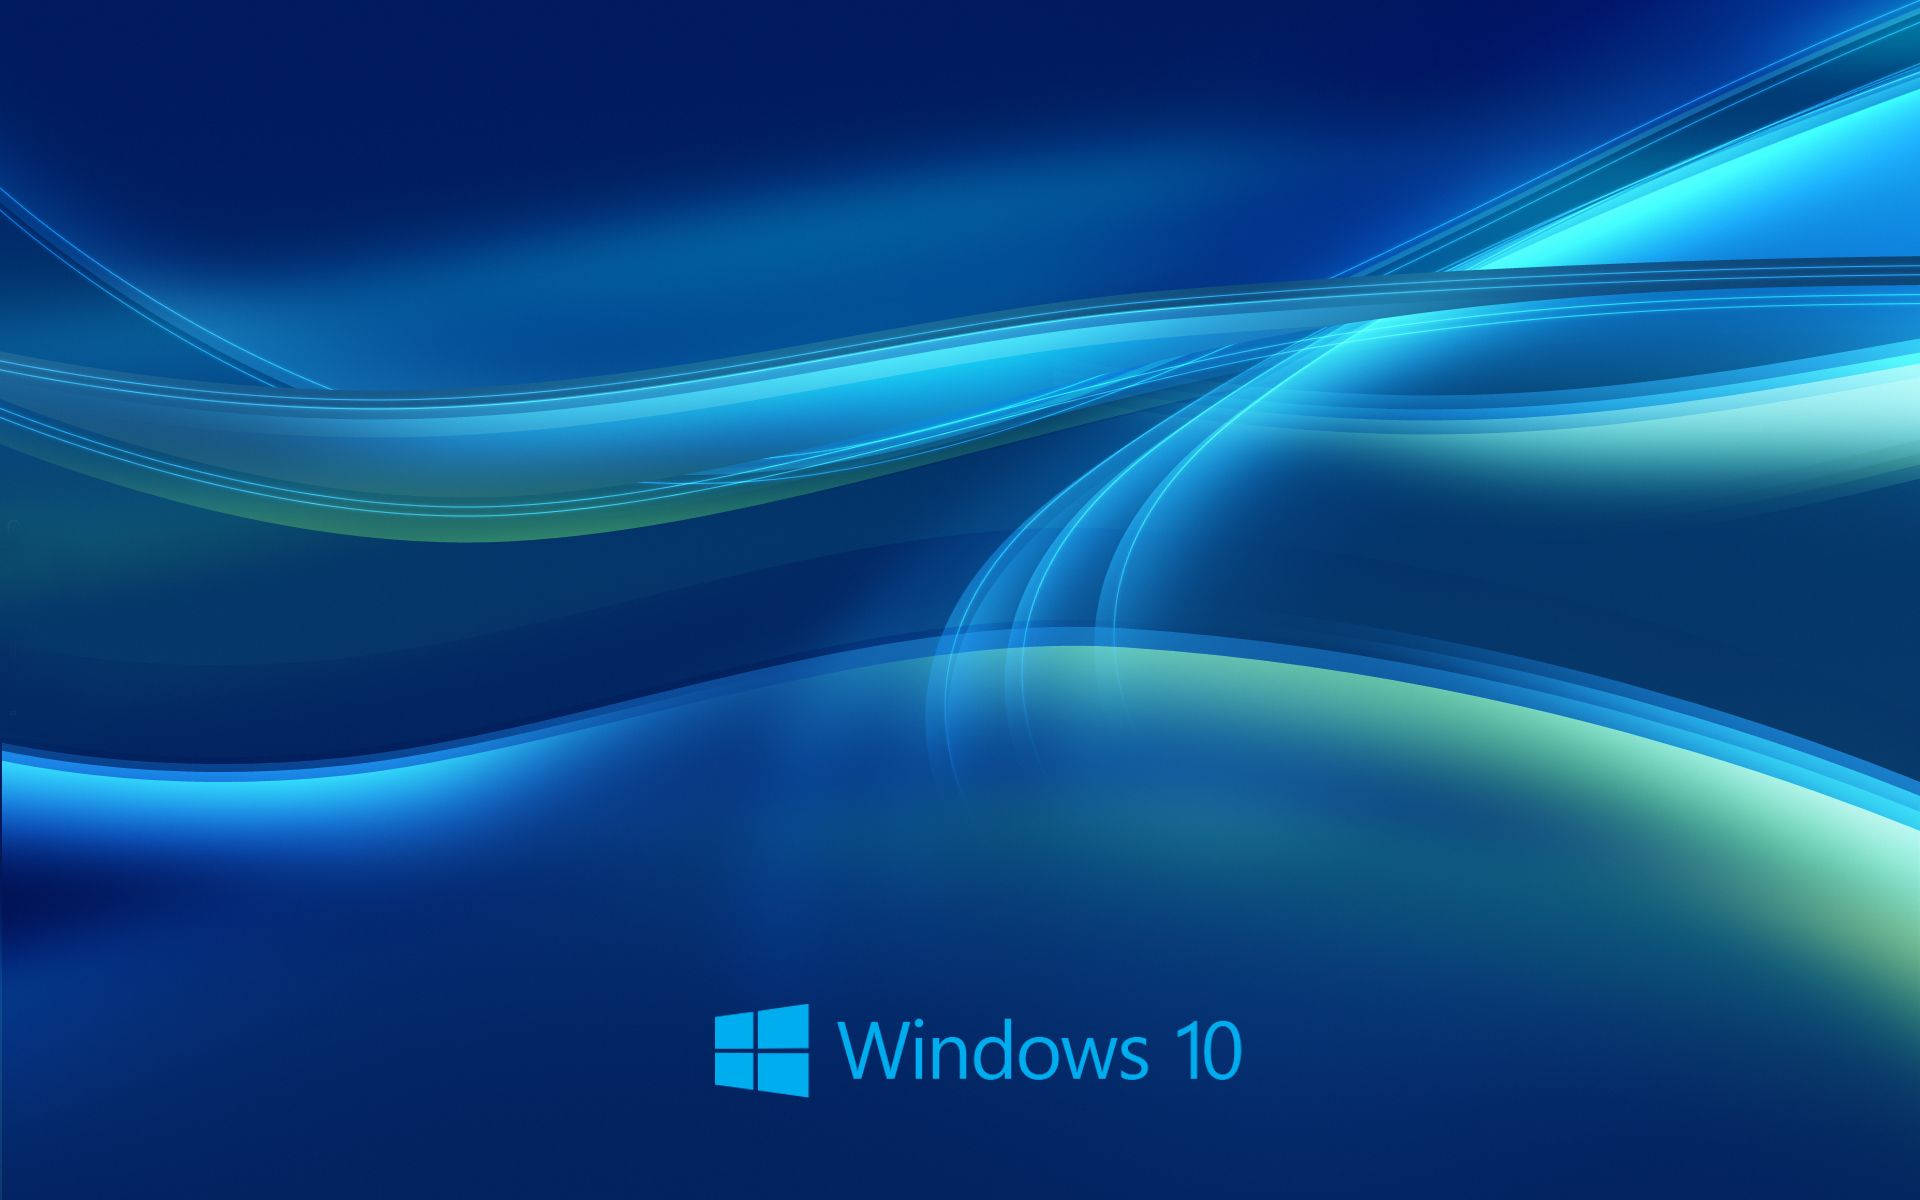 Windows 10 Minimalist Theme Wallpaper